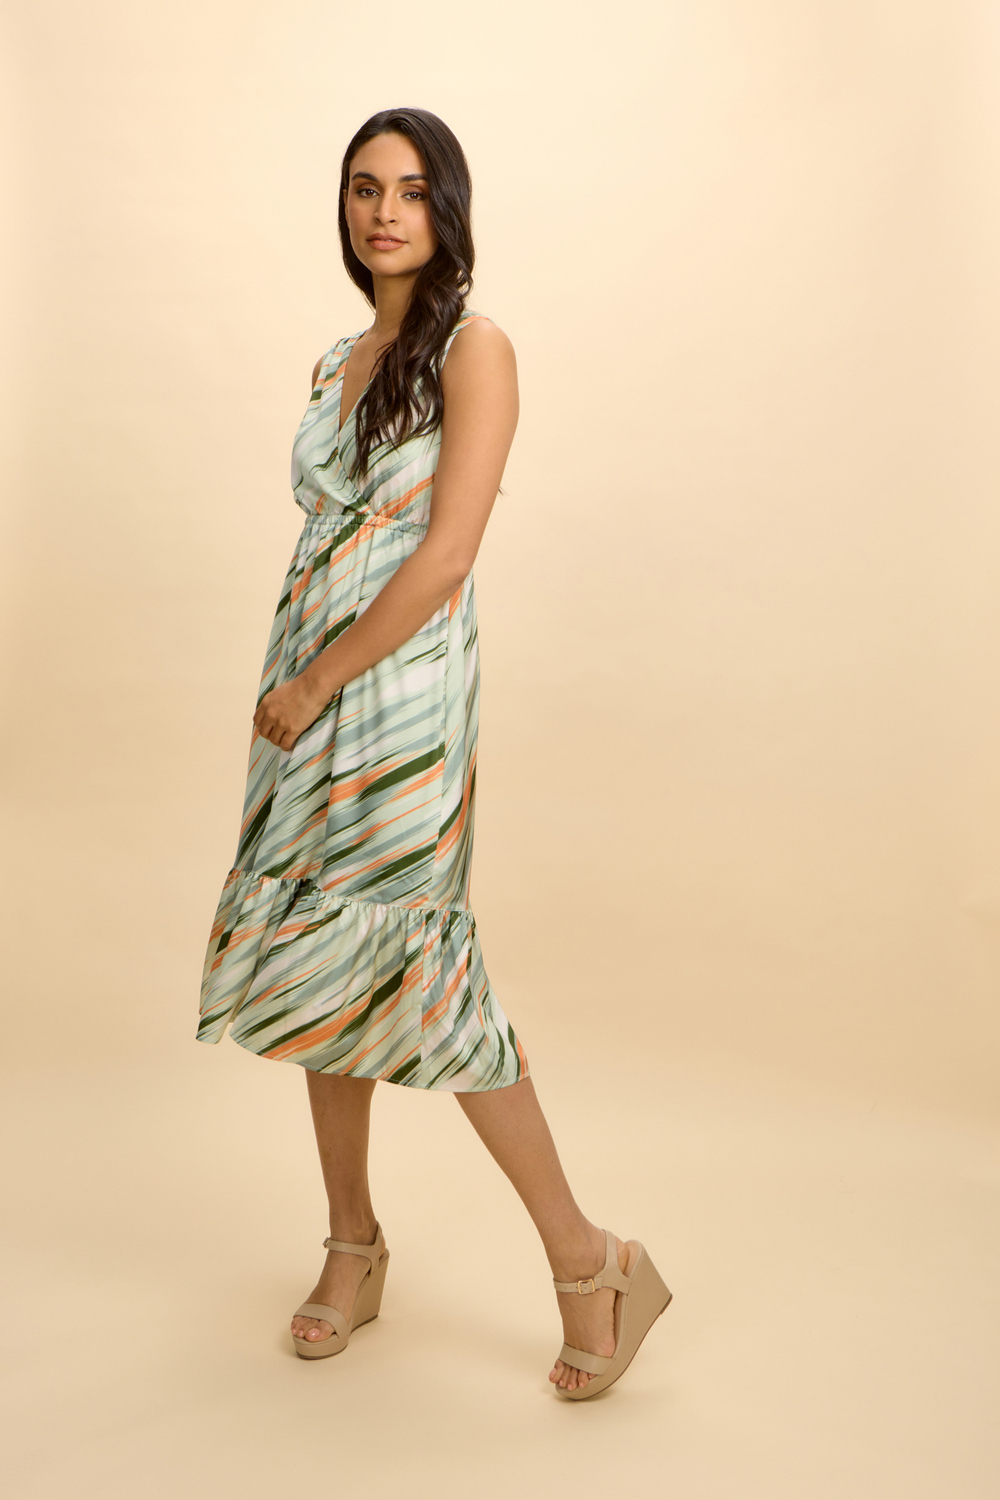 lively print Dress style SP2430. Sage Green Ikat